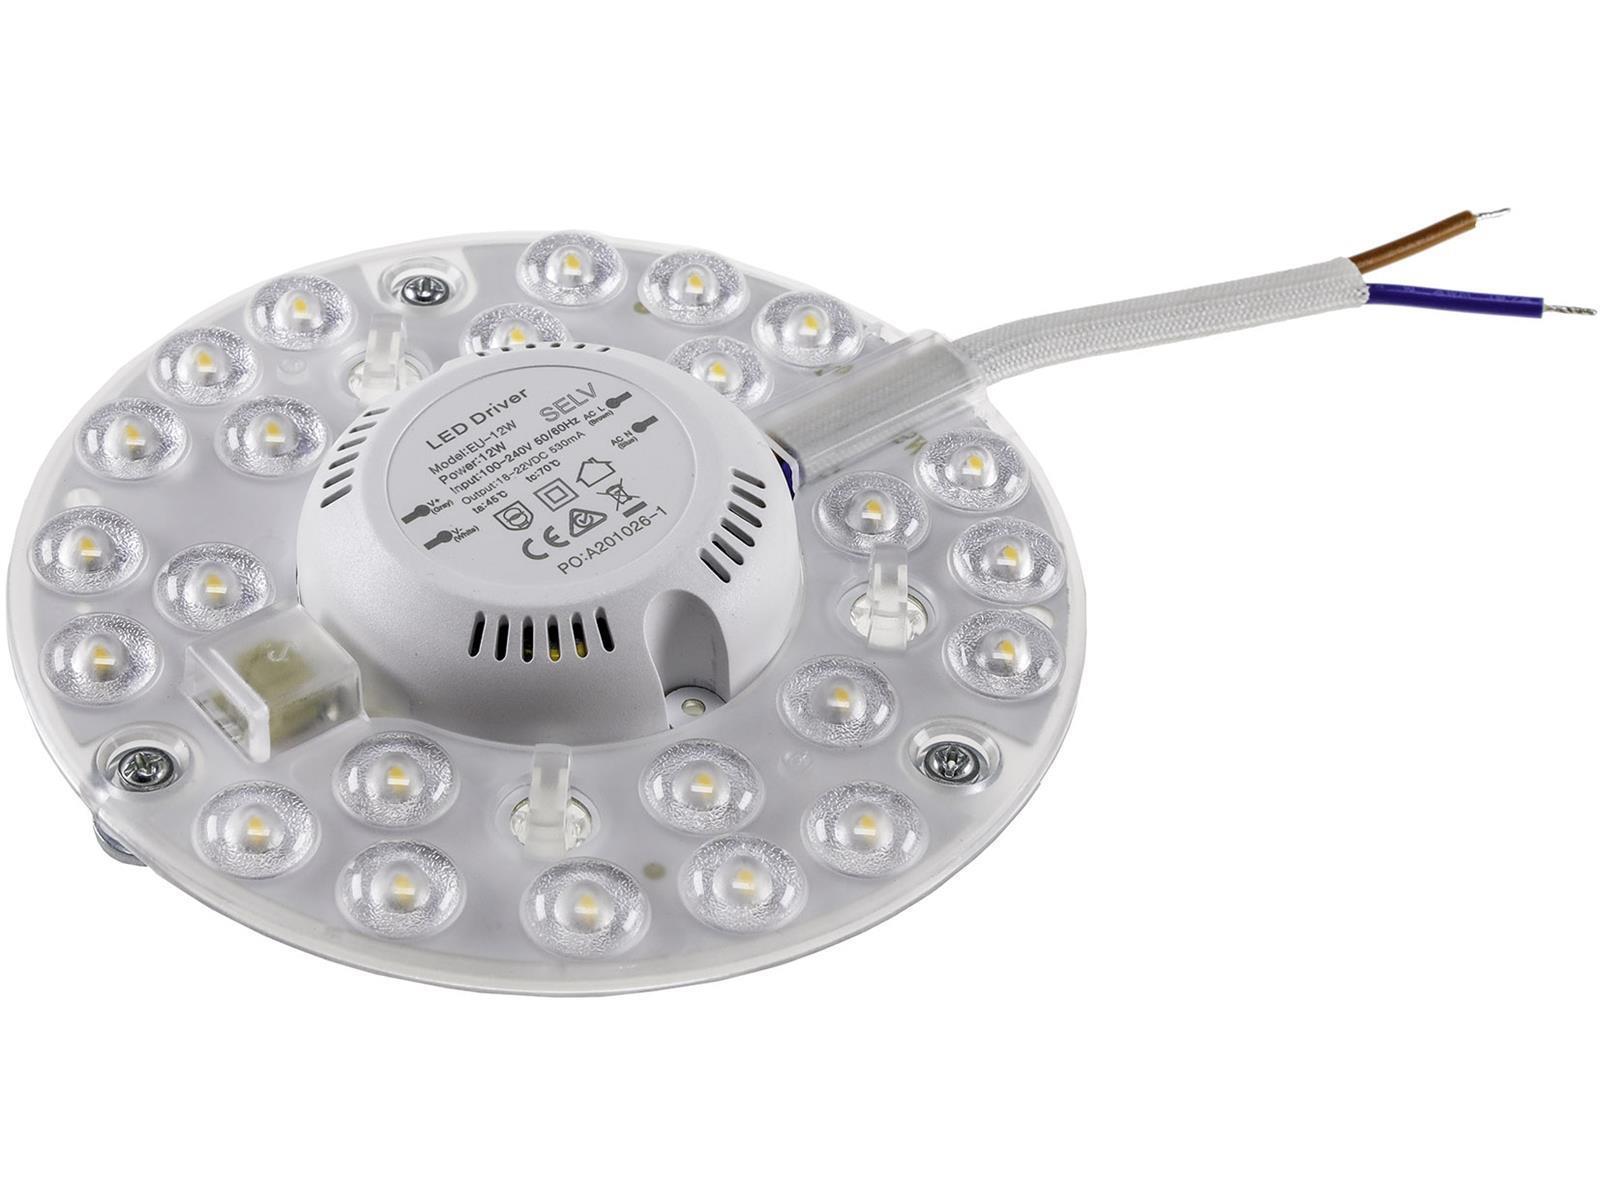 LED Umrüstmodul "UM12nw" für LeuchtenØ125mm, 12W, 1300lm, 4000K, Magnethalter